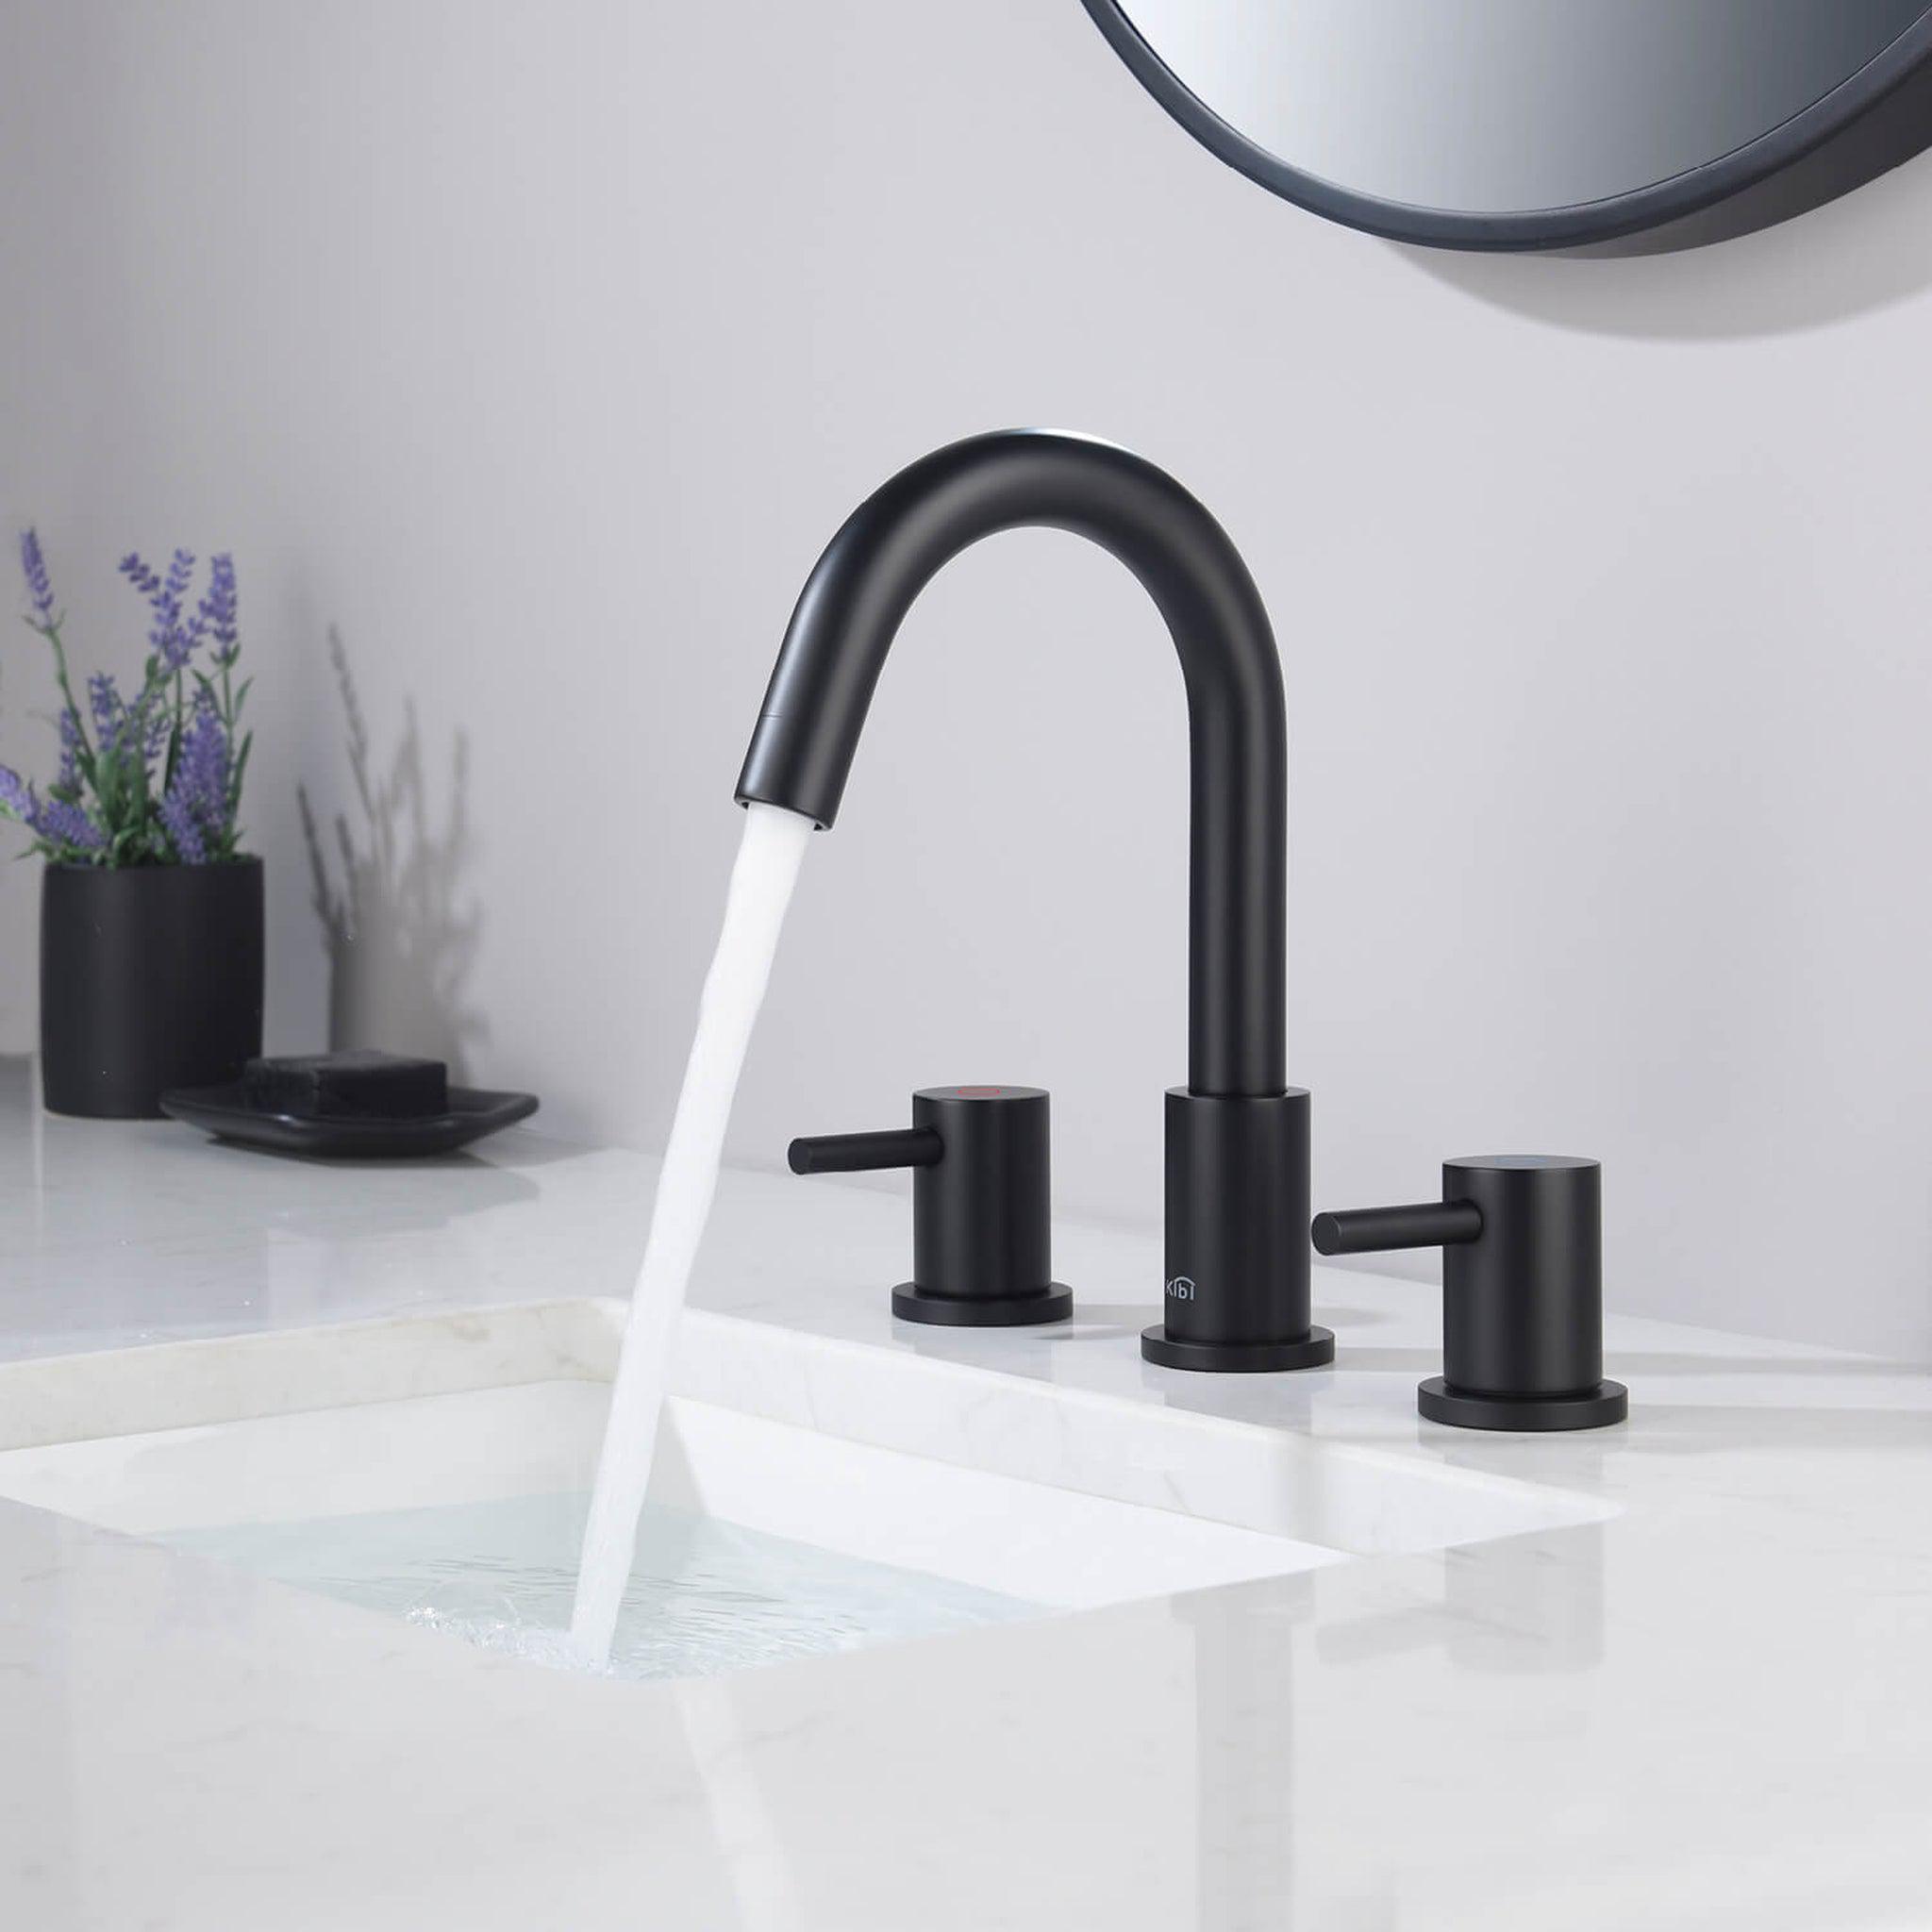 KIBI, KIBI Circular 8" Widespread 2-Handle Matte Black Solid Brass Bathroom Sink Faucet With Pop-Up Drain